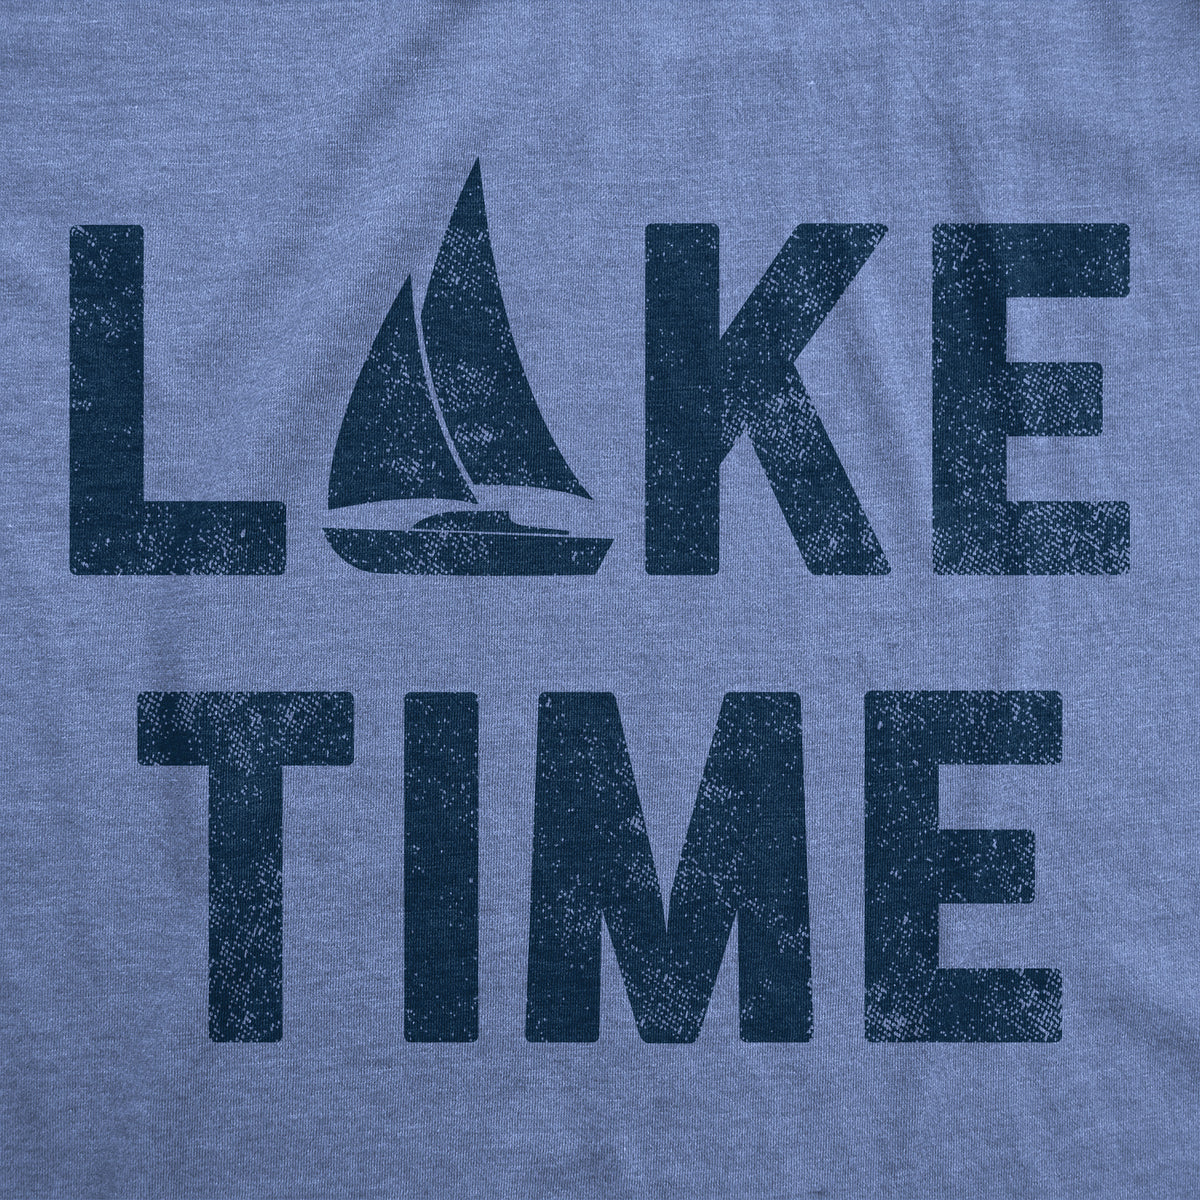 Lake Time Women&#39;s T Shirt